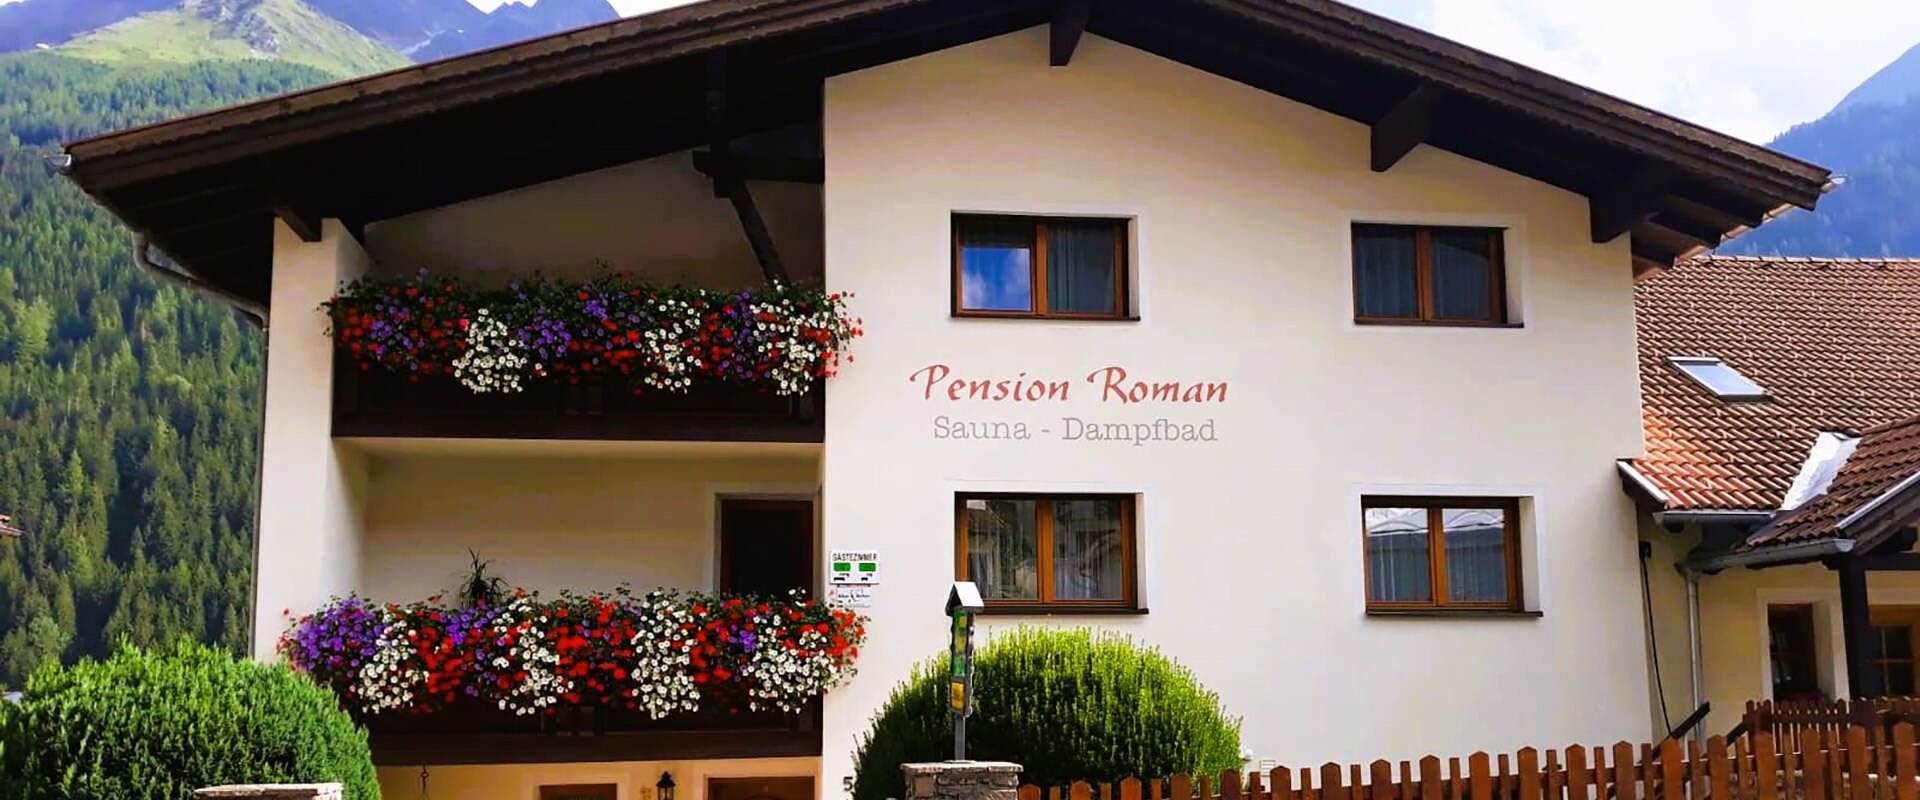 Pension Roman am Arlberg in Tirol